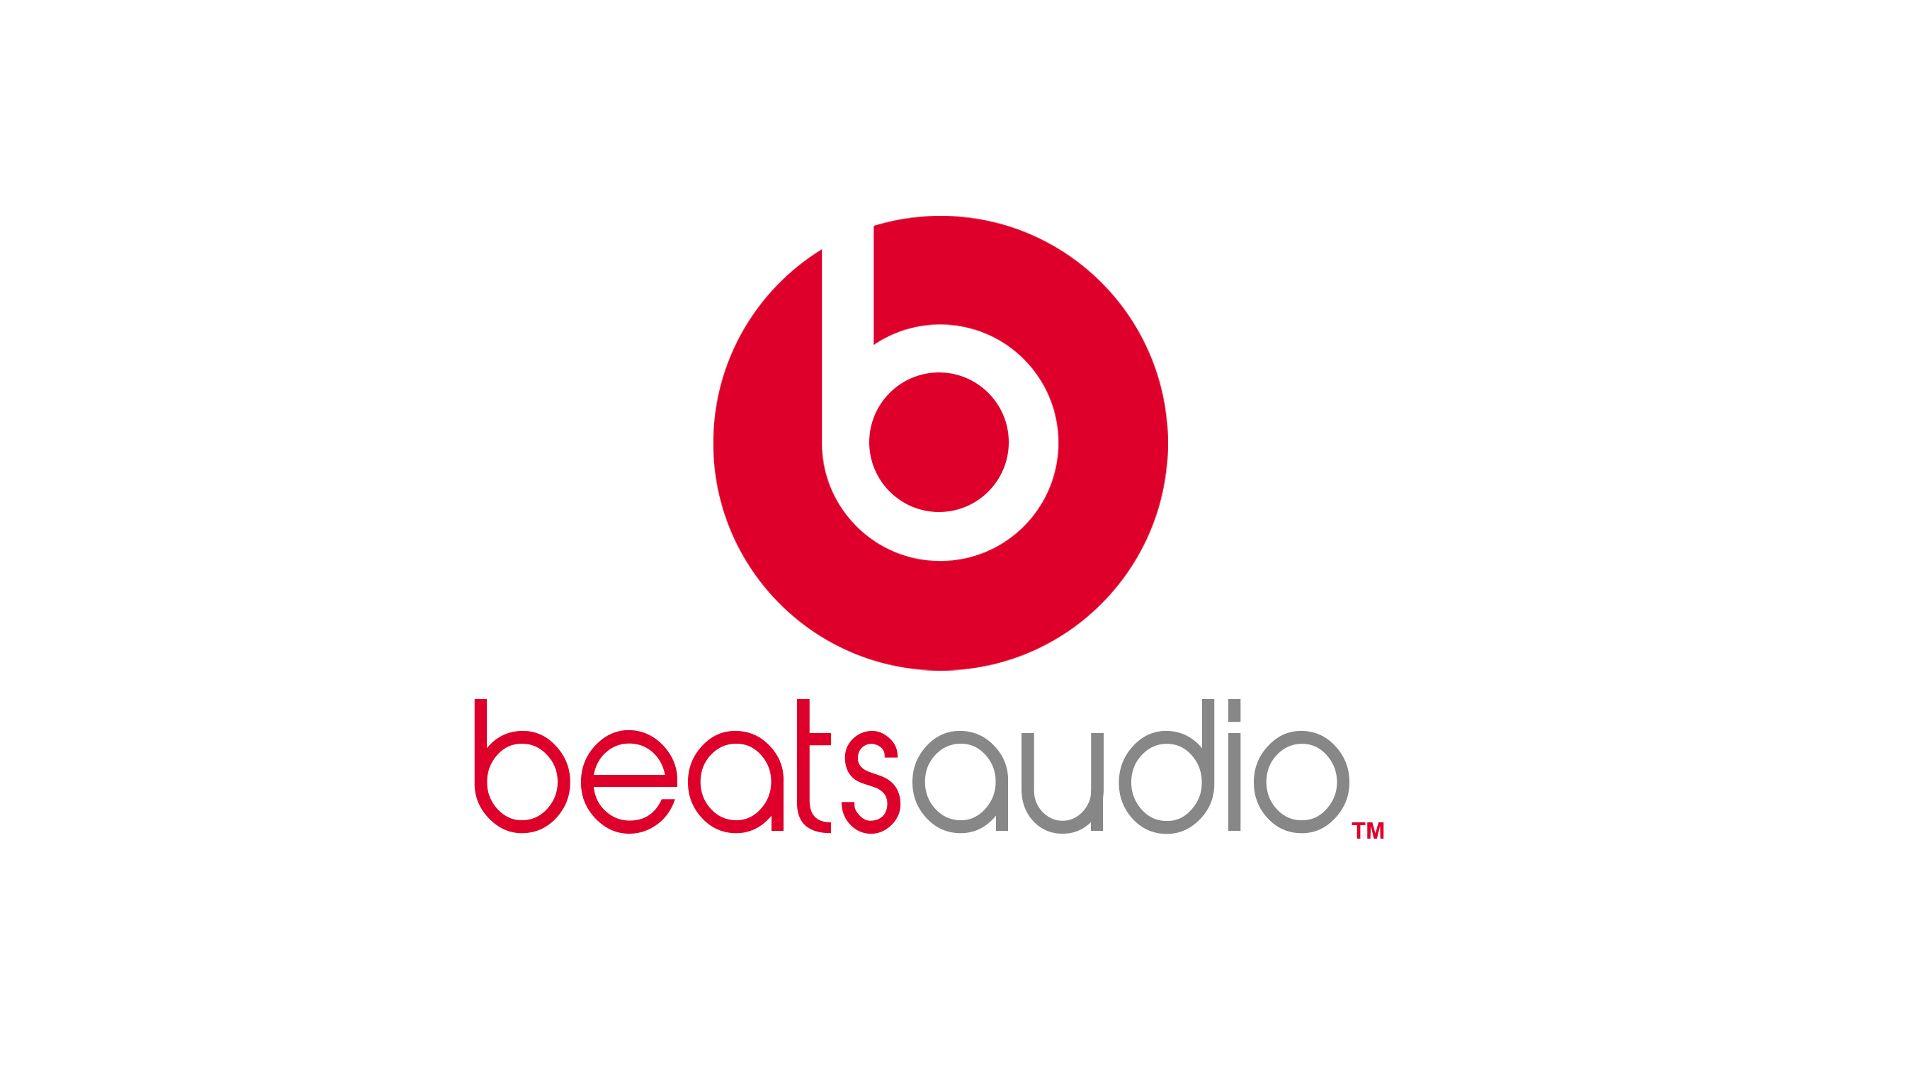 Beats Audio Wallpaper 5283 1920x1080 px